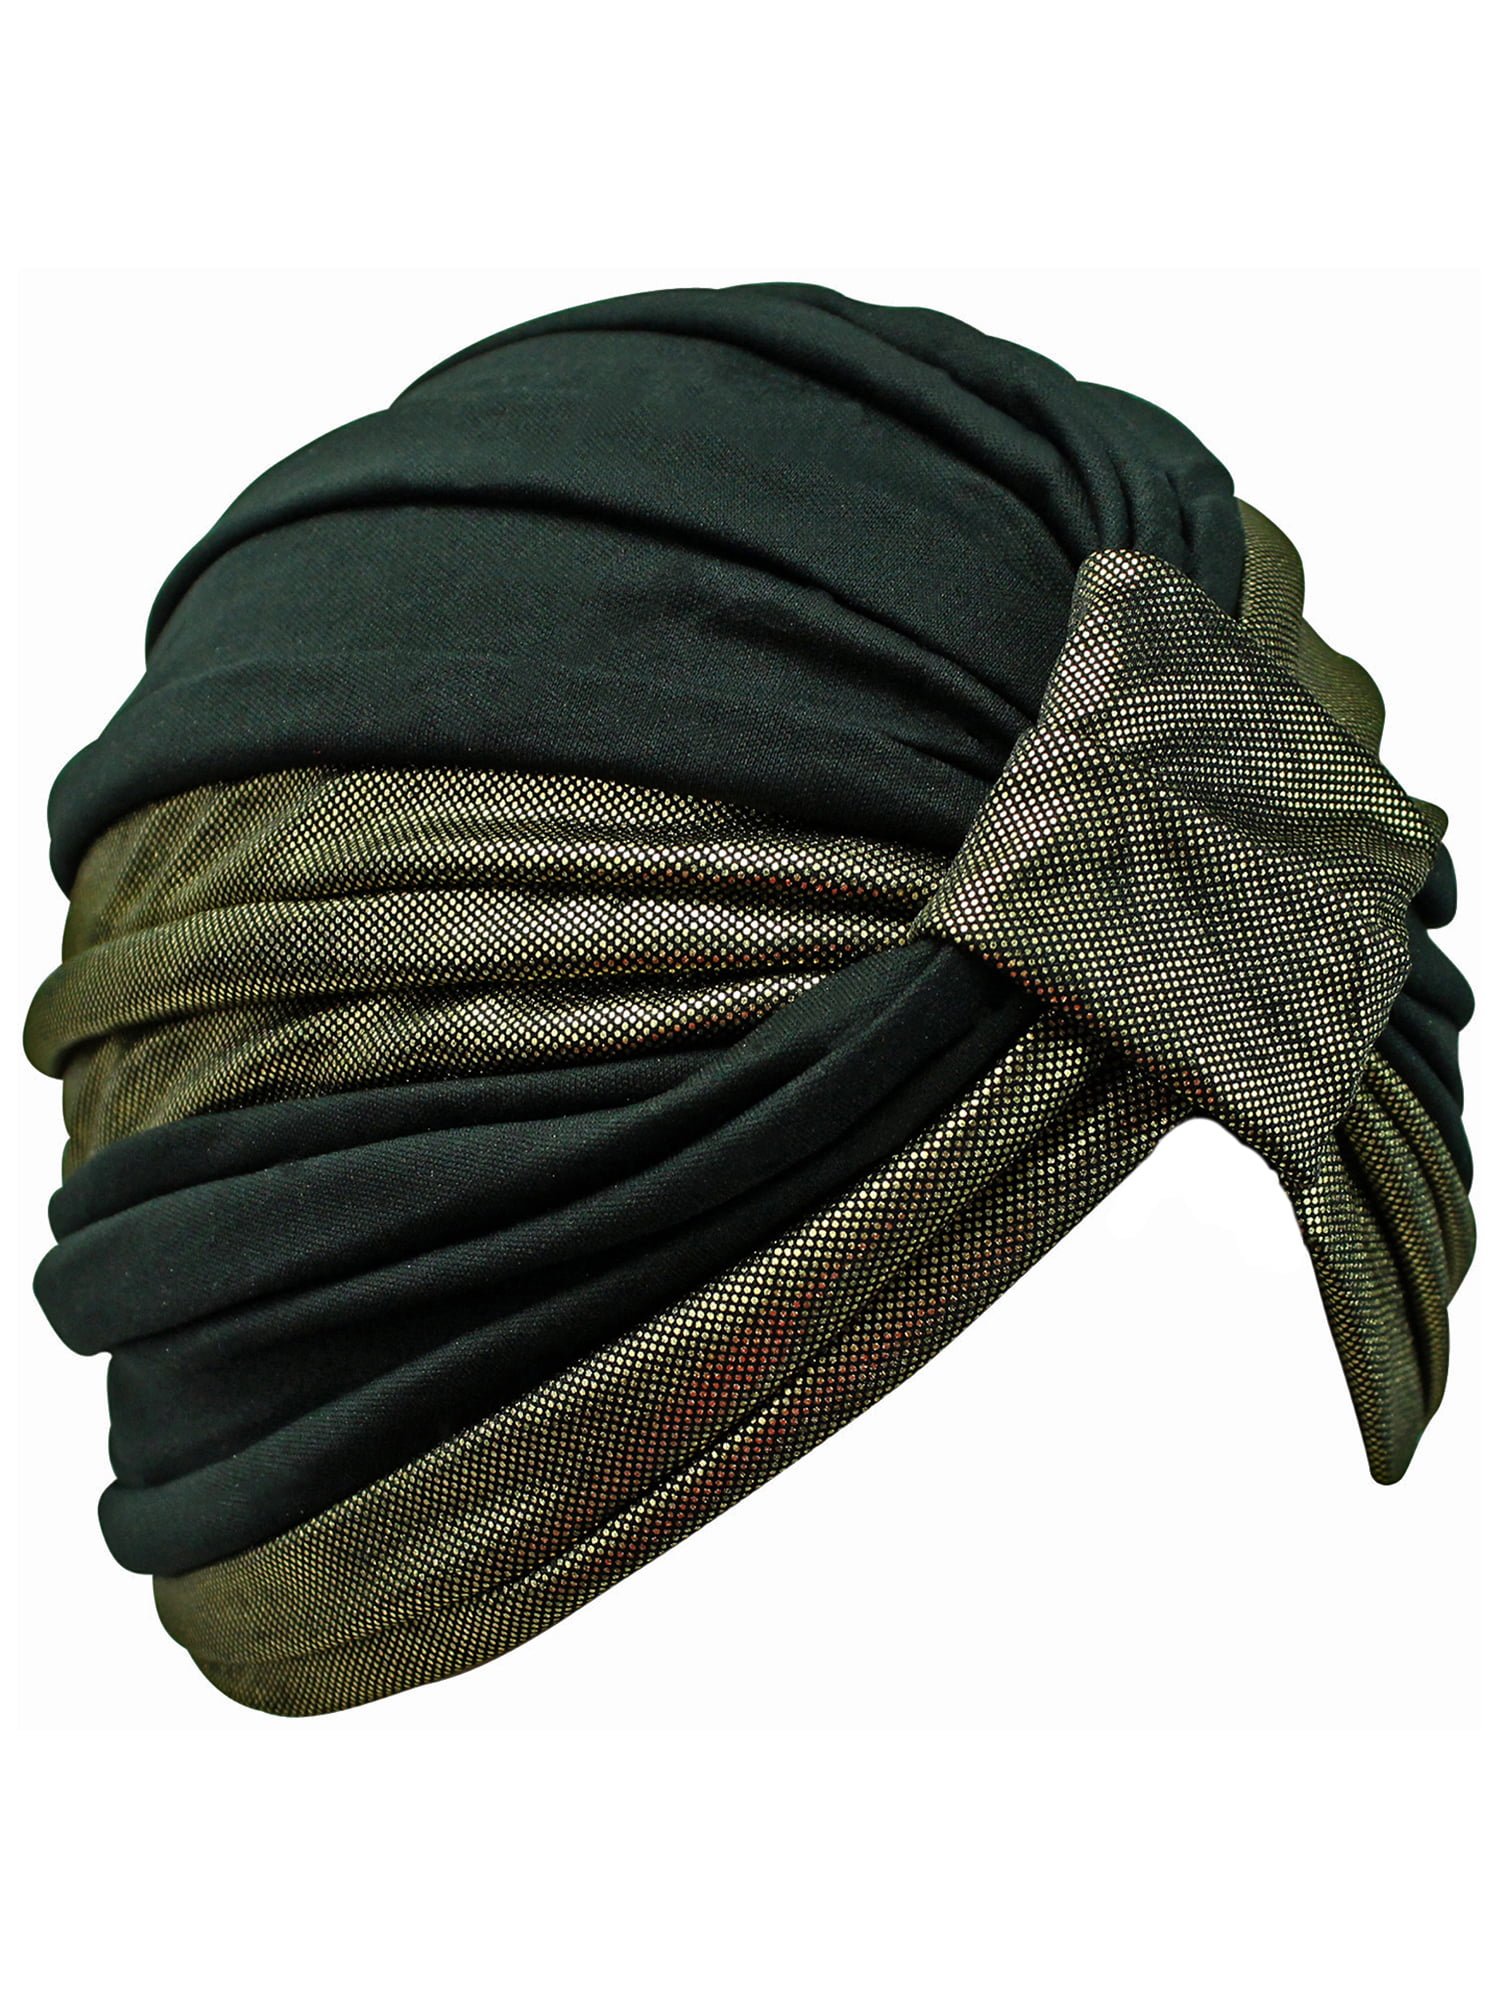 Striped head wrap turban size 0-3 months